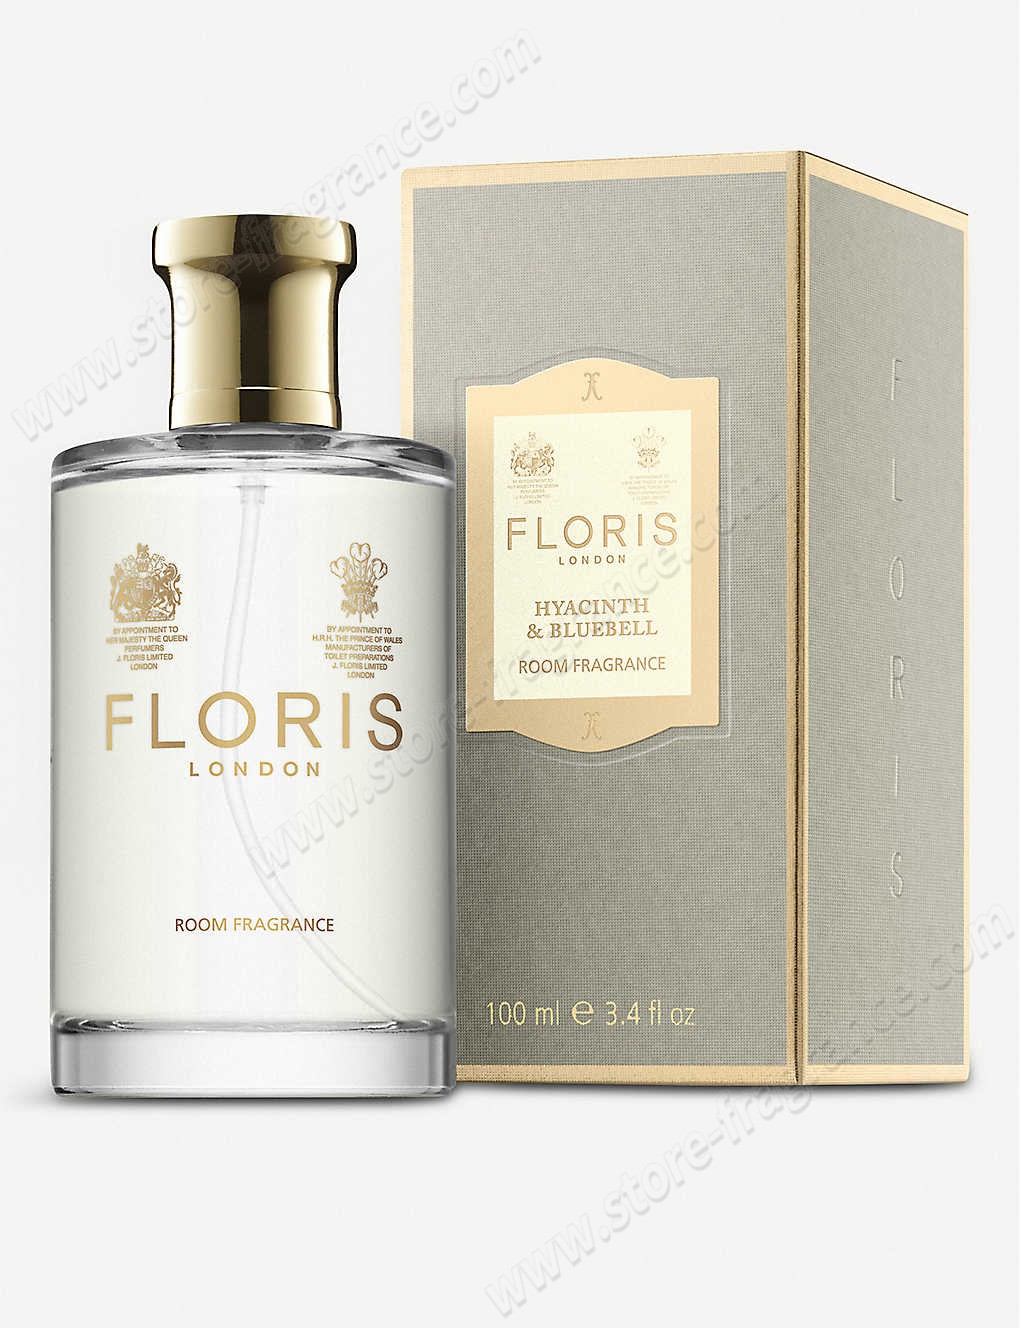 FLORIS/Hyacinth & bluebell room fragrance 100ml Limit Offer - -1